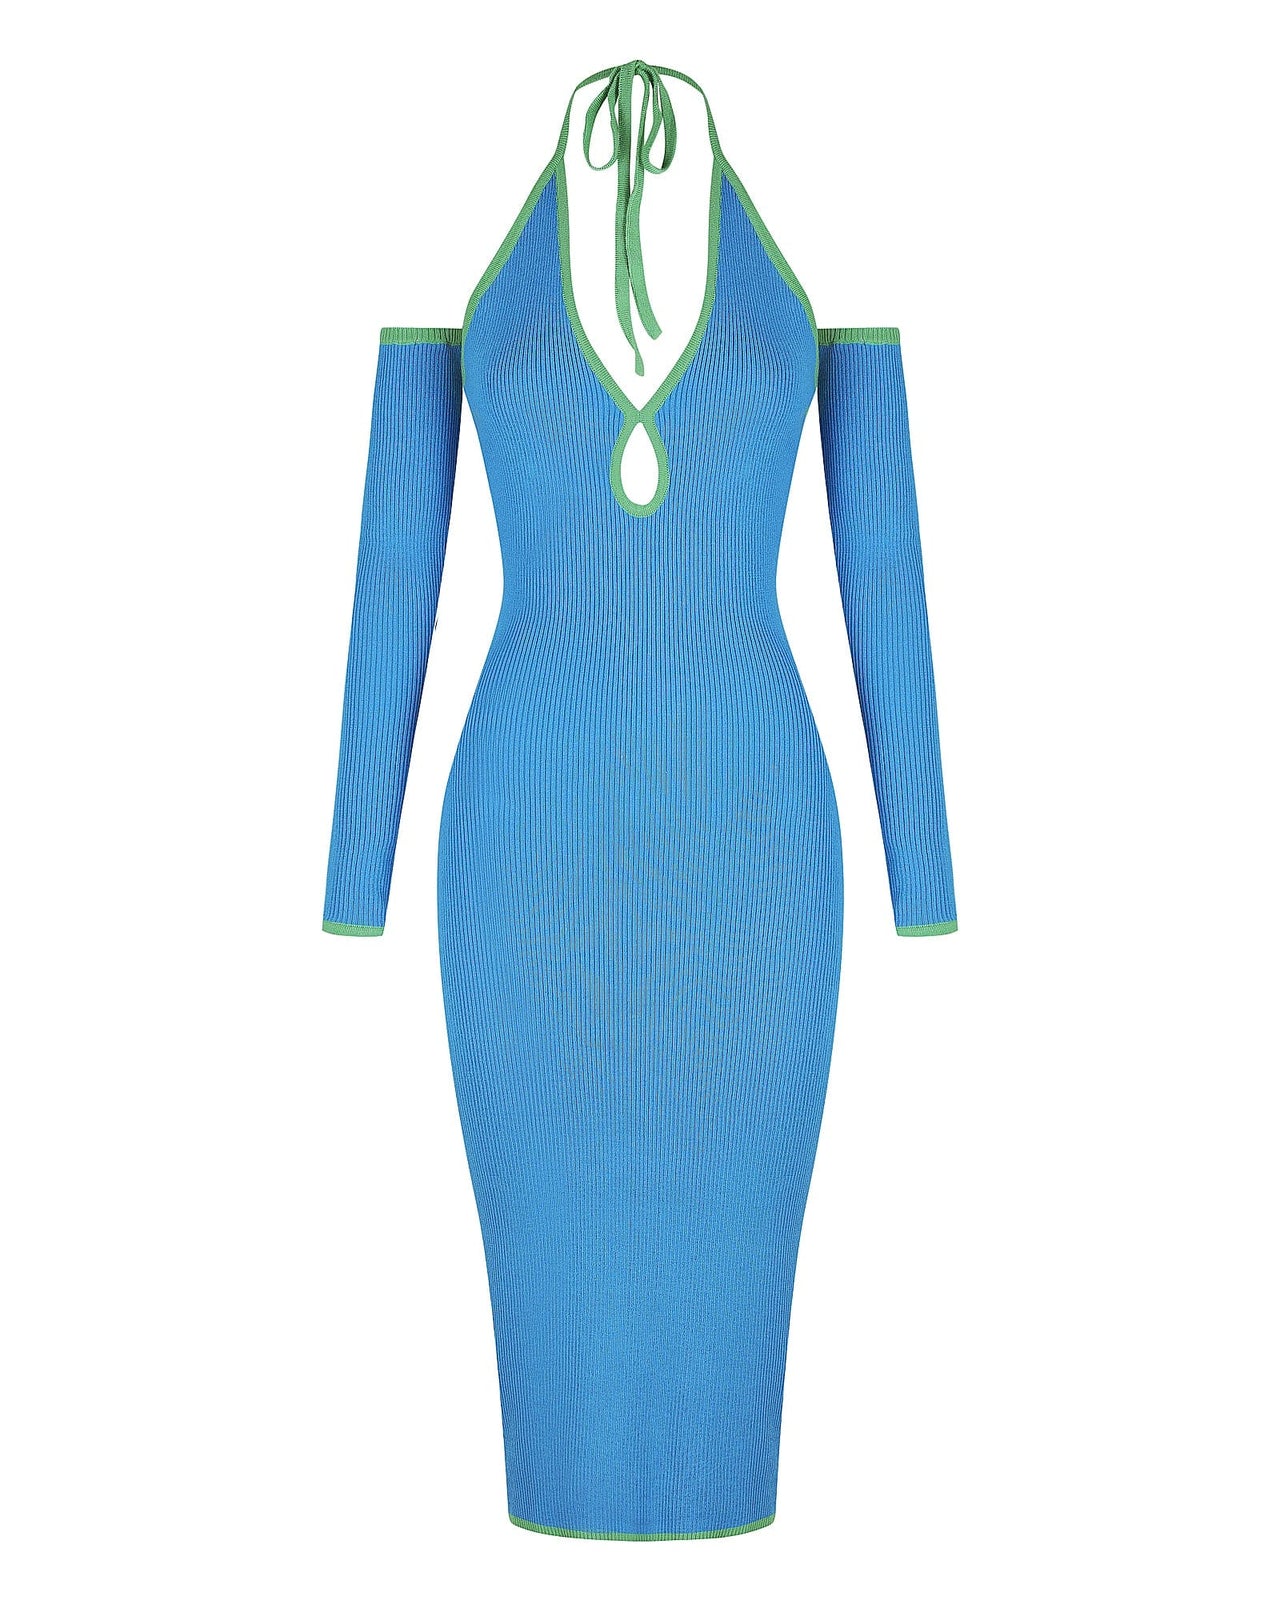 Sandy Knit Midi Dress Blue/Green, Dress by Charlie Holiday | LIT Boutique